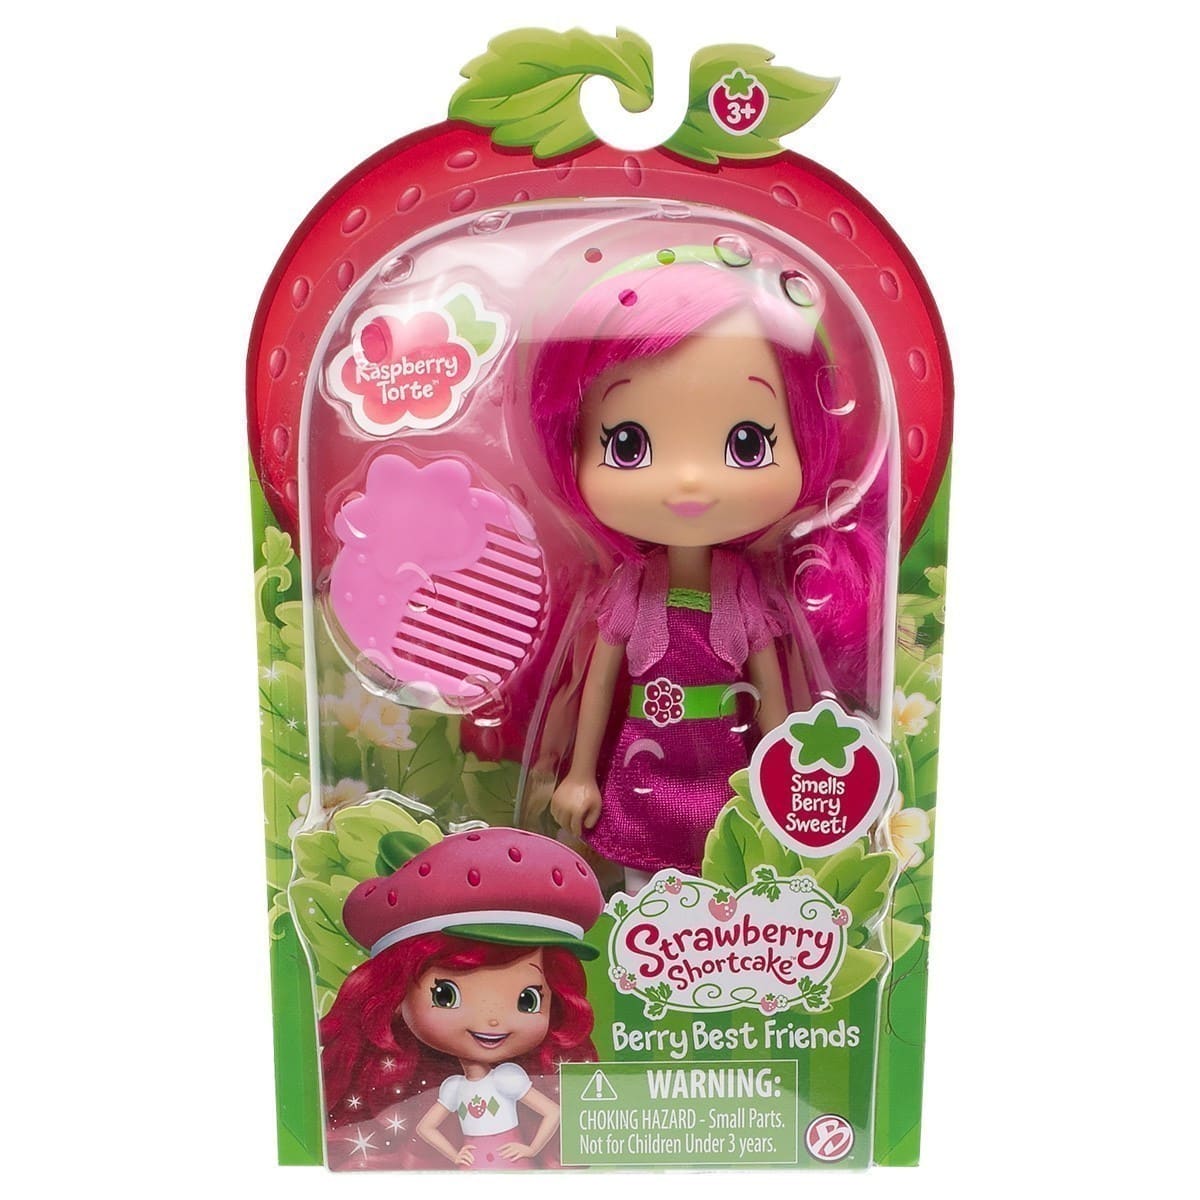 Strawberry Shortcake - Berry Best Friends - 15cm Raspberry Torte Doll